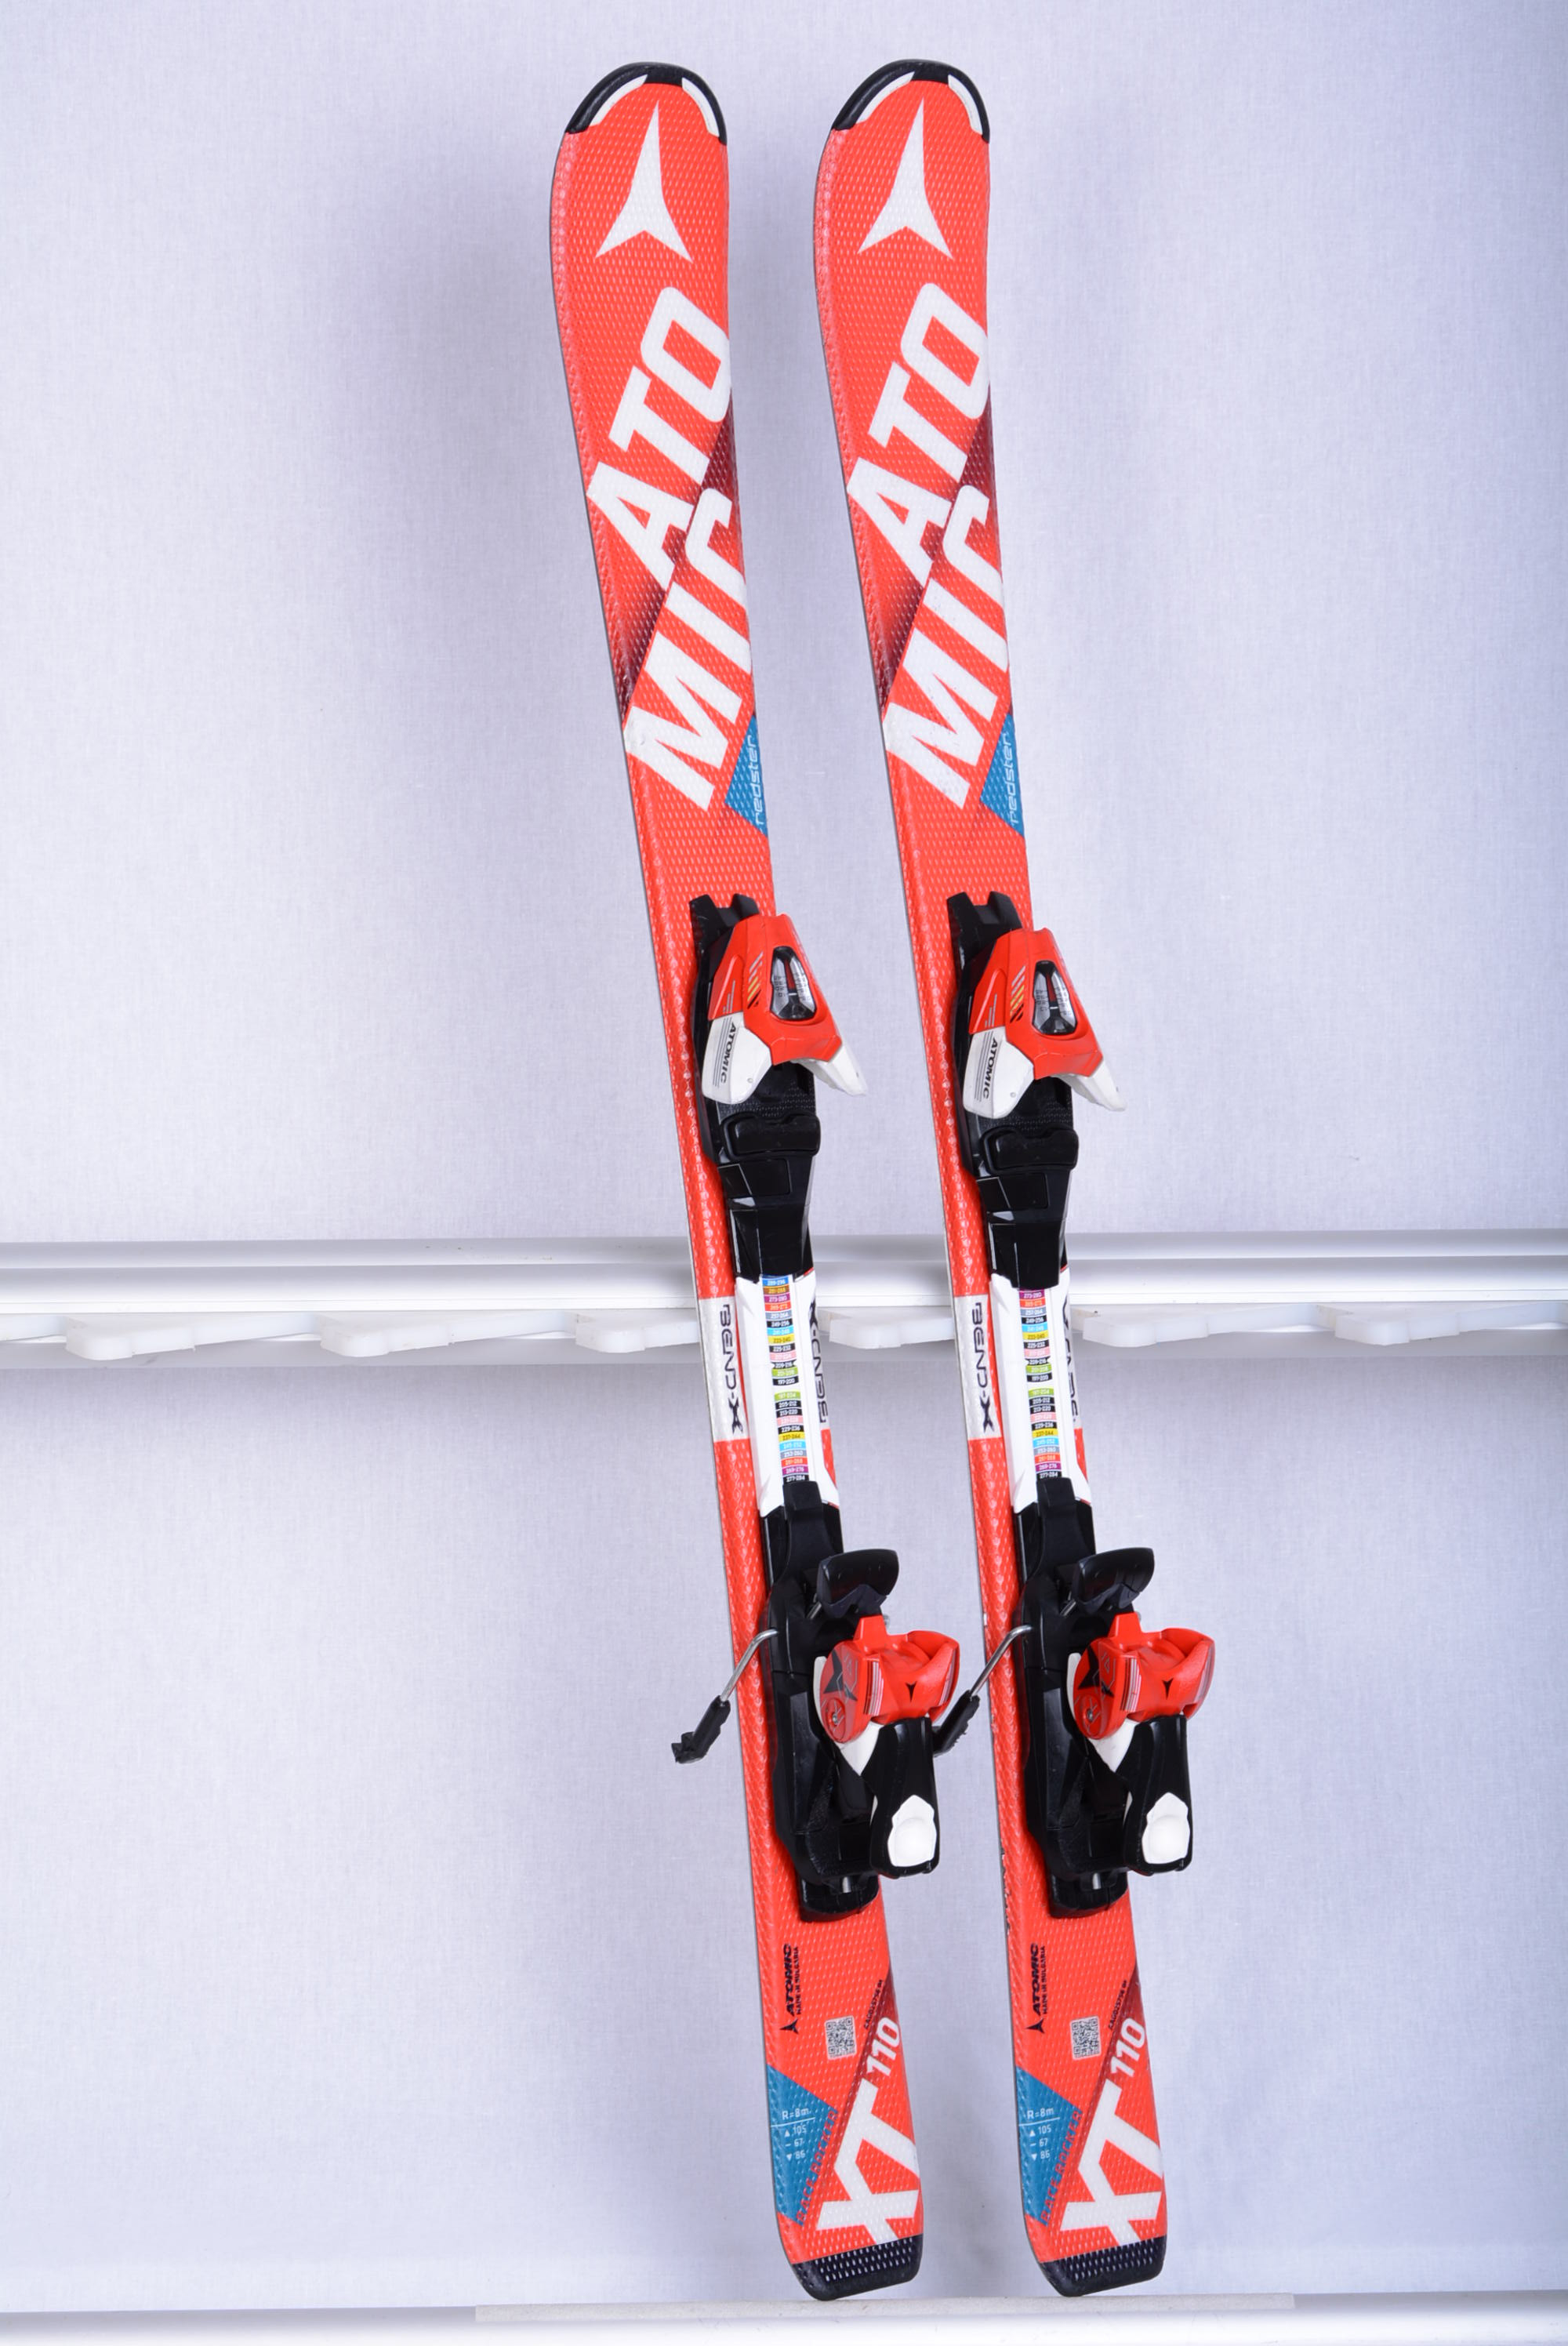 skis ATOMIC REDSTER XT bend-X, RED, rocker + Atomic XTE 7 condition ) - Mardosport.com